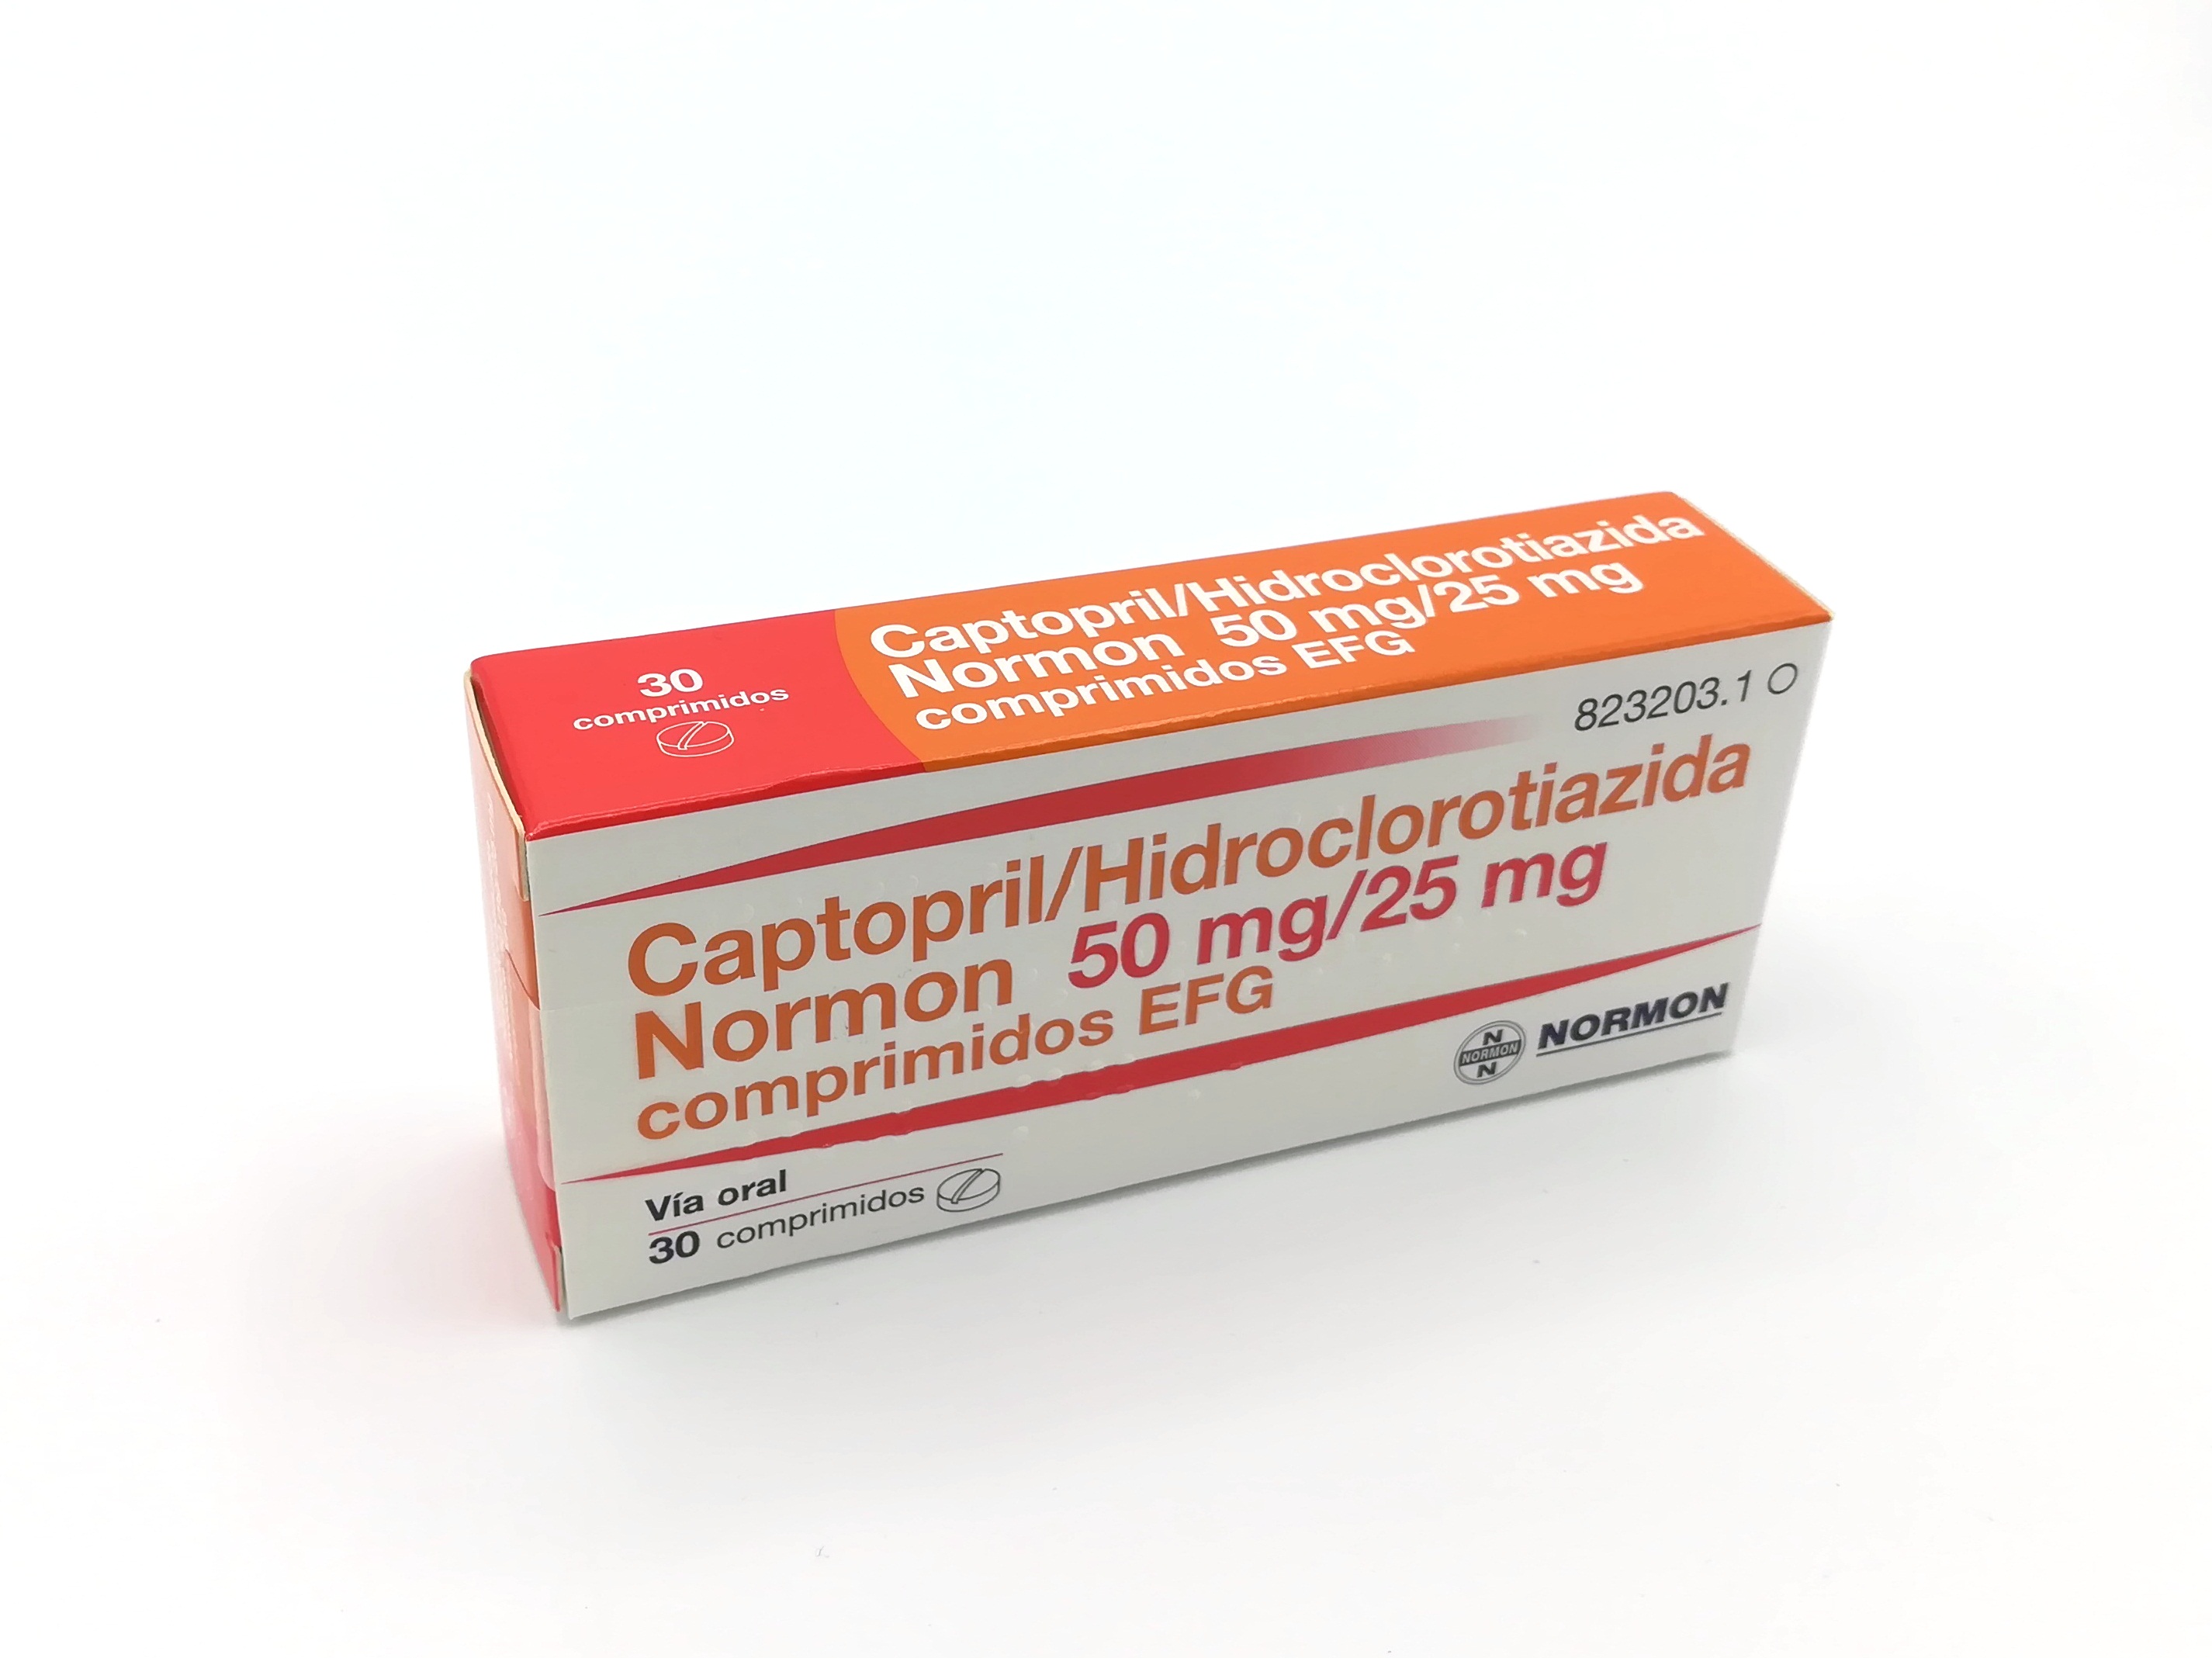 CAPTOPRIL/HIDROCLOROTIAZIDA NORMON EFG 50 mg/25 mg 500 COMPRIMIDOS -  Farmacéuticos